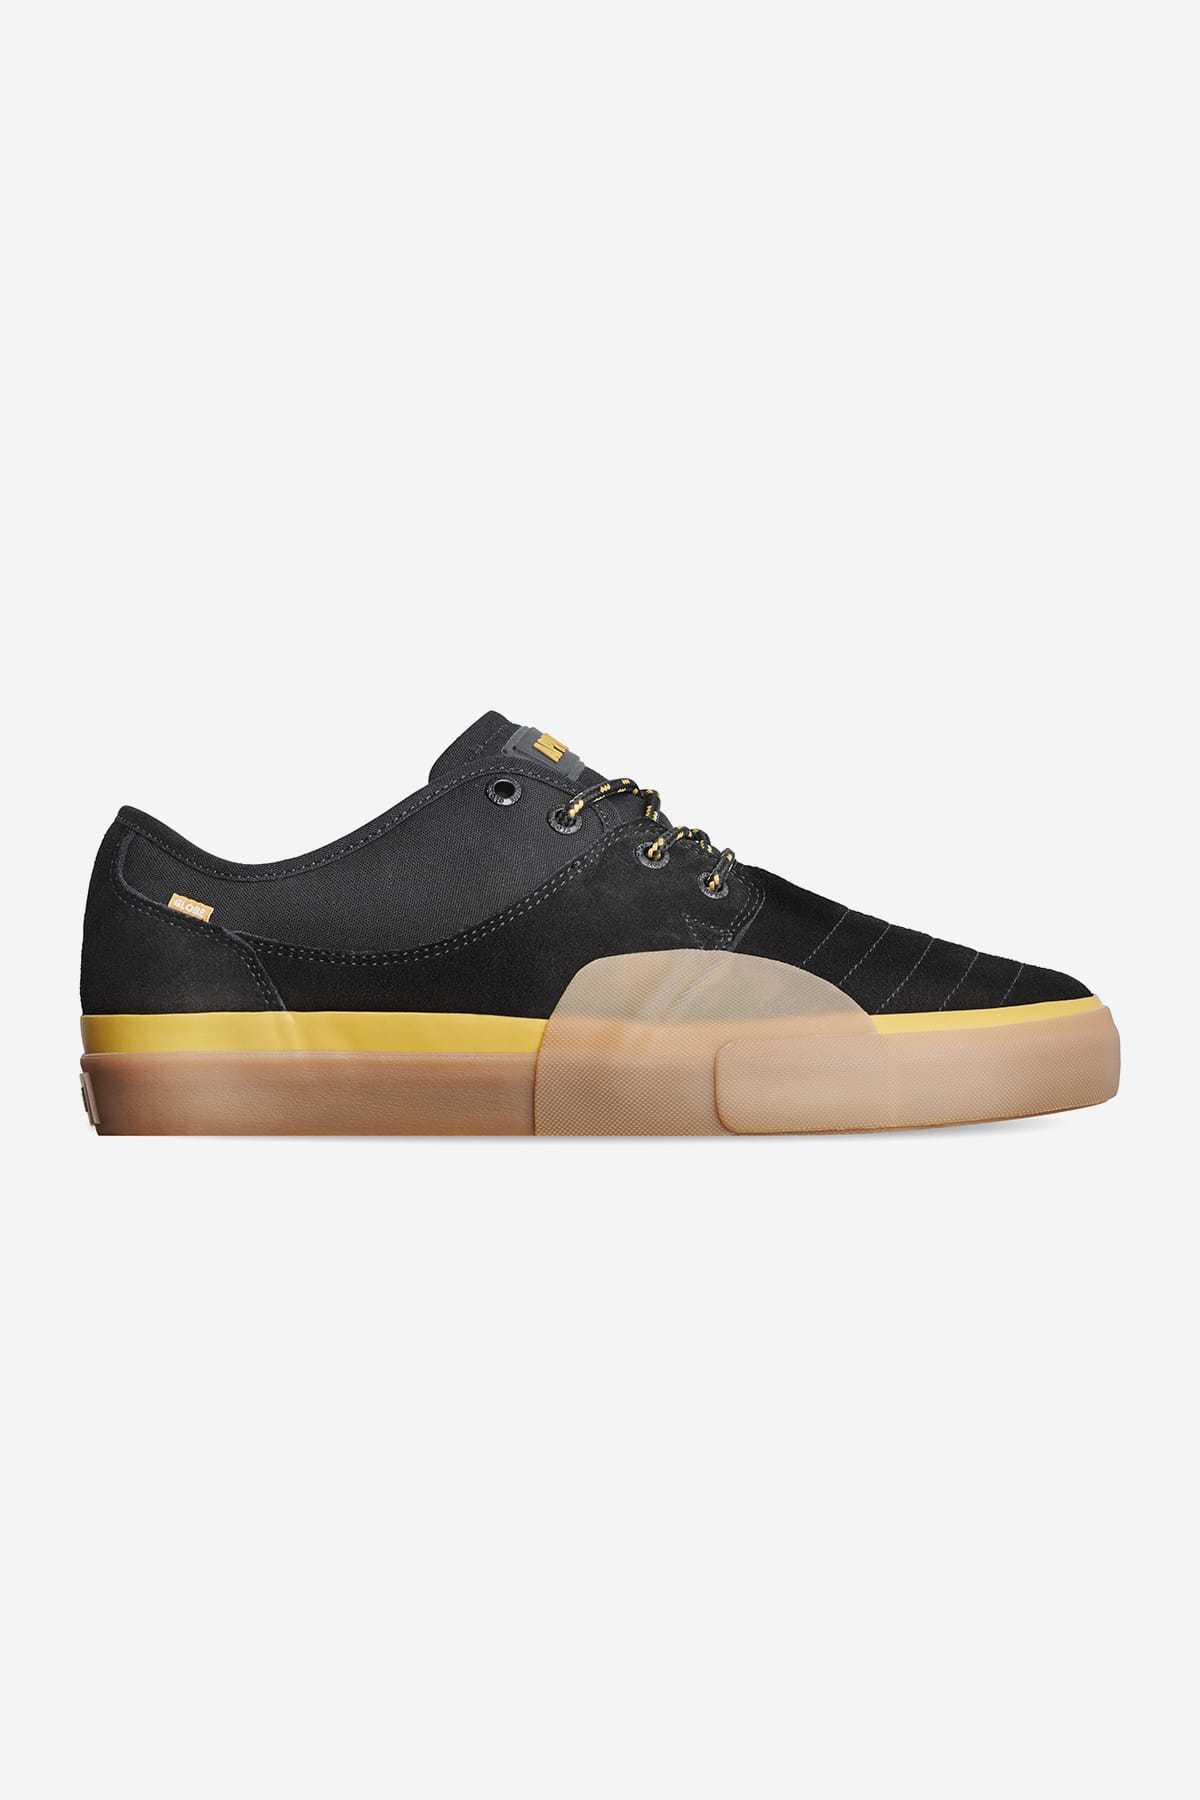 Globe - Mahalo Plus - Black/Mustard - Skate Shoes